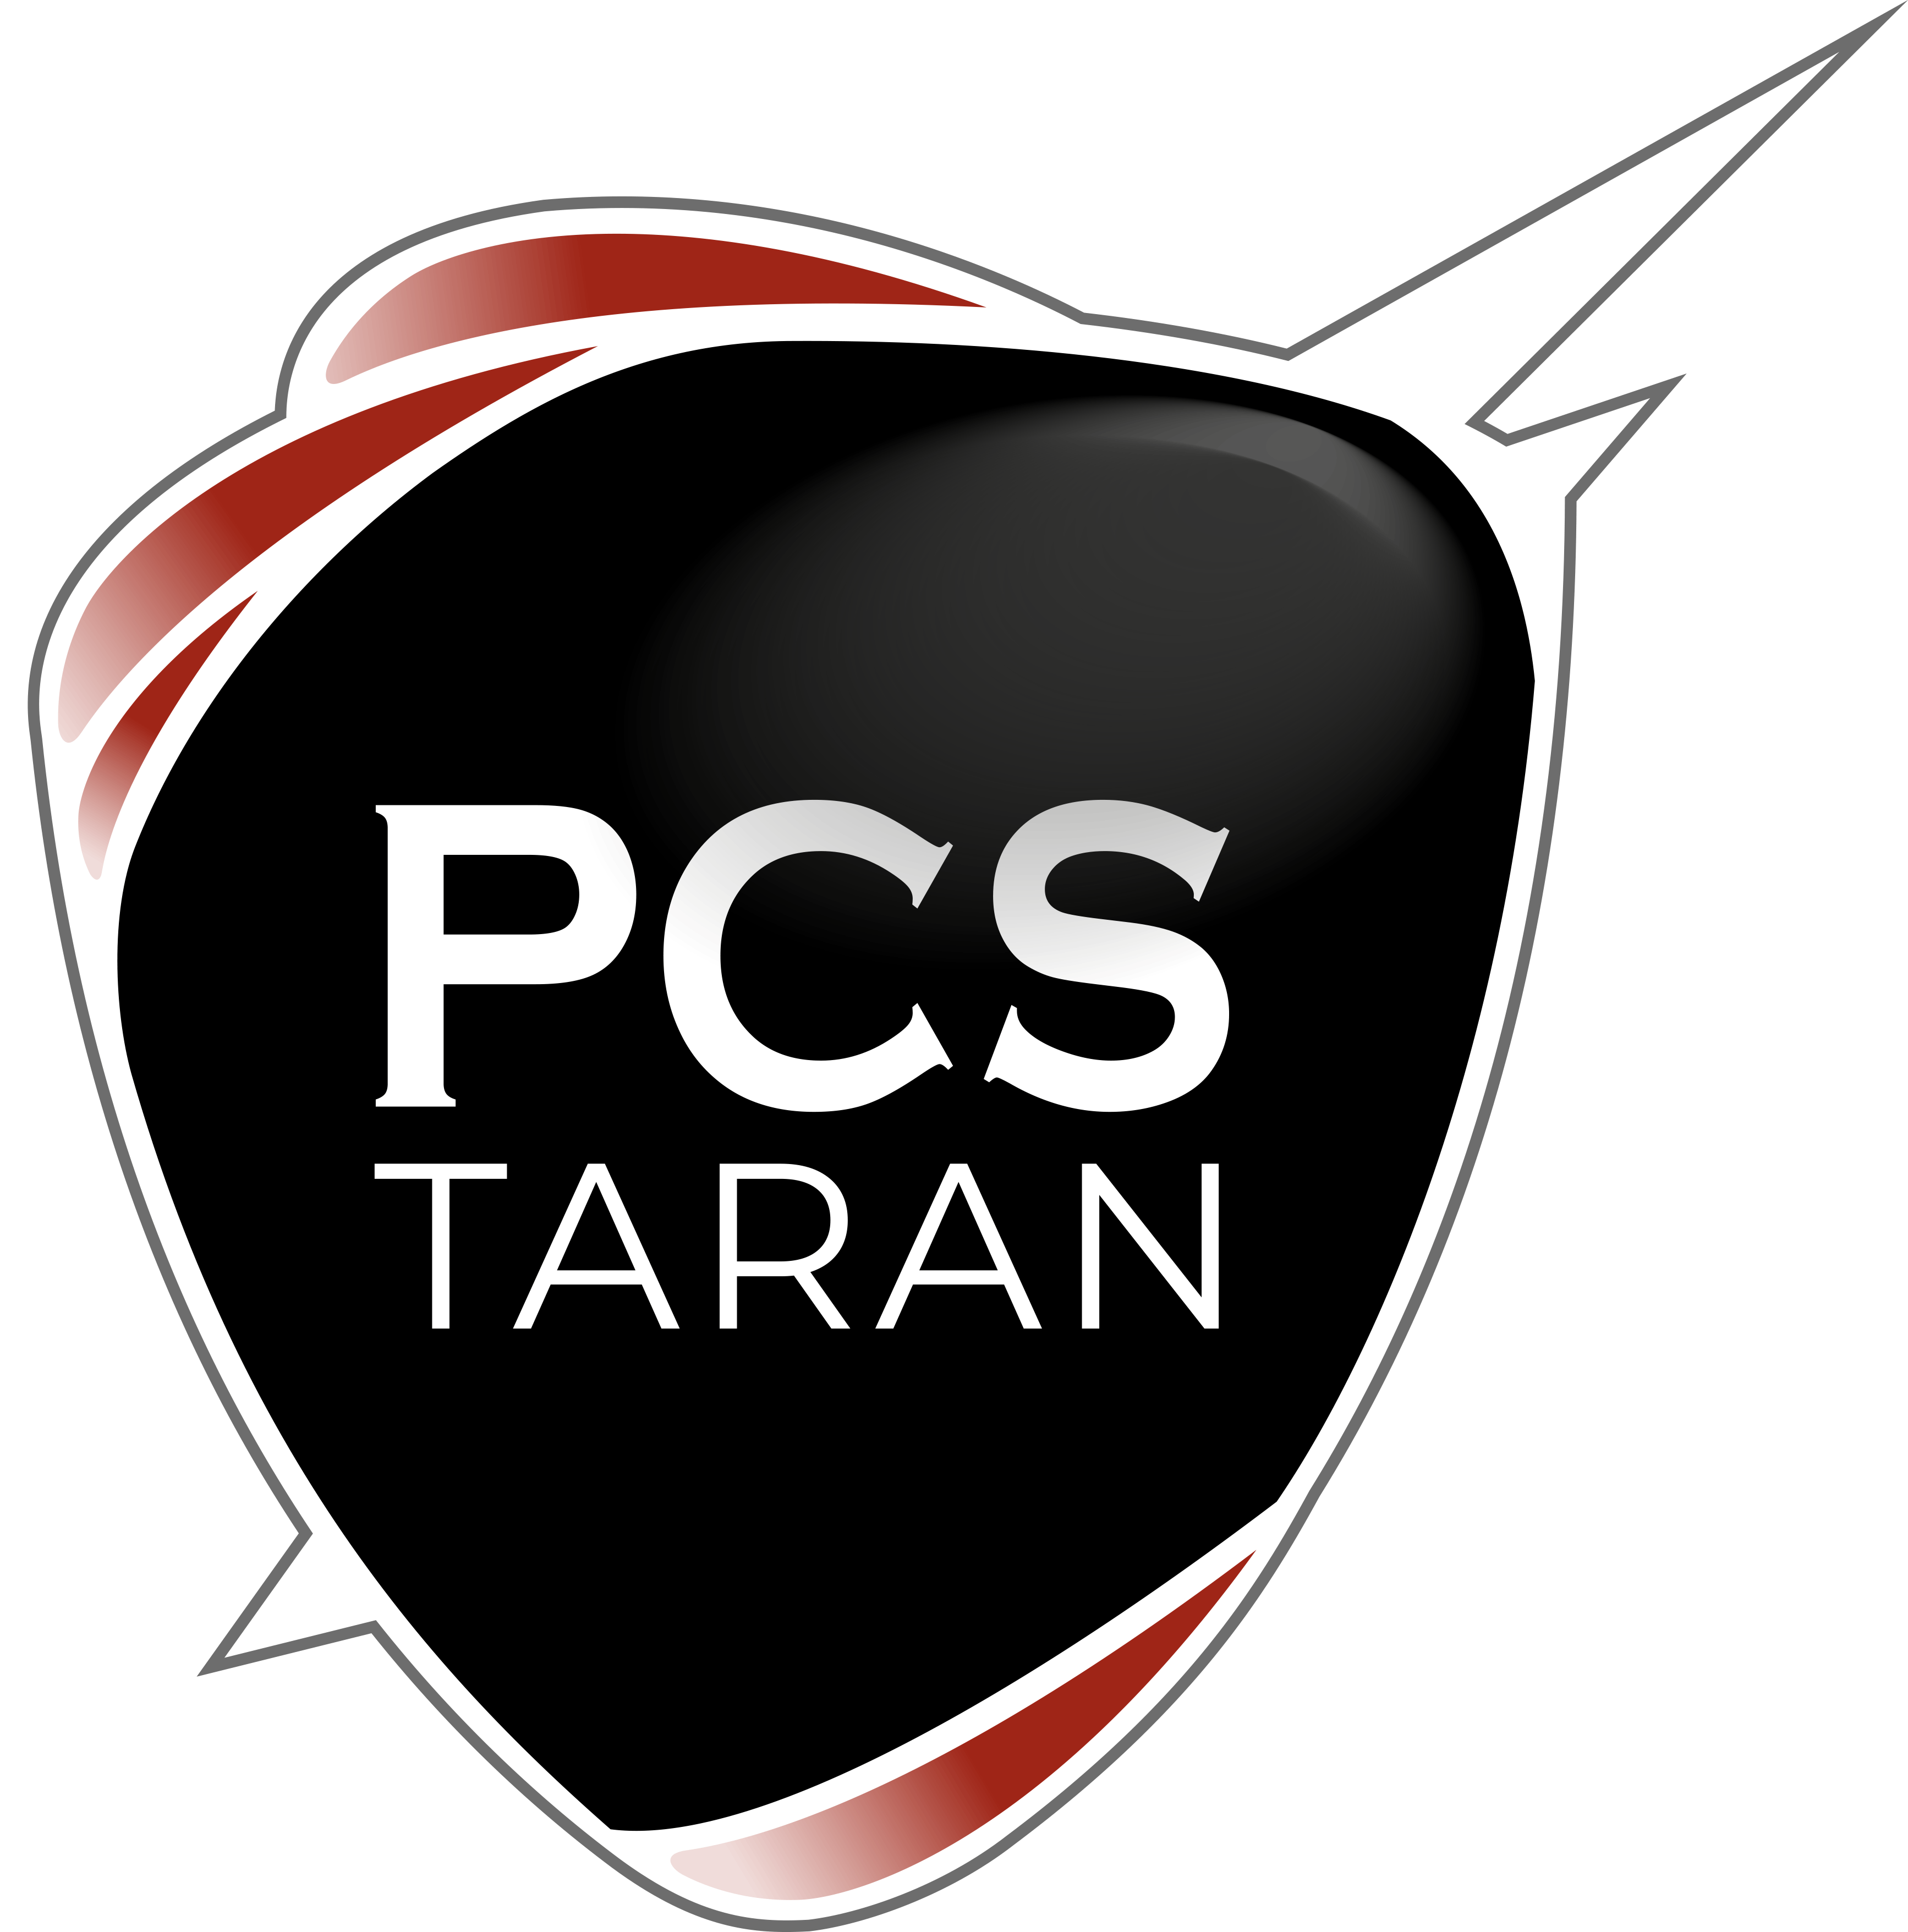 Team PCS Taran